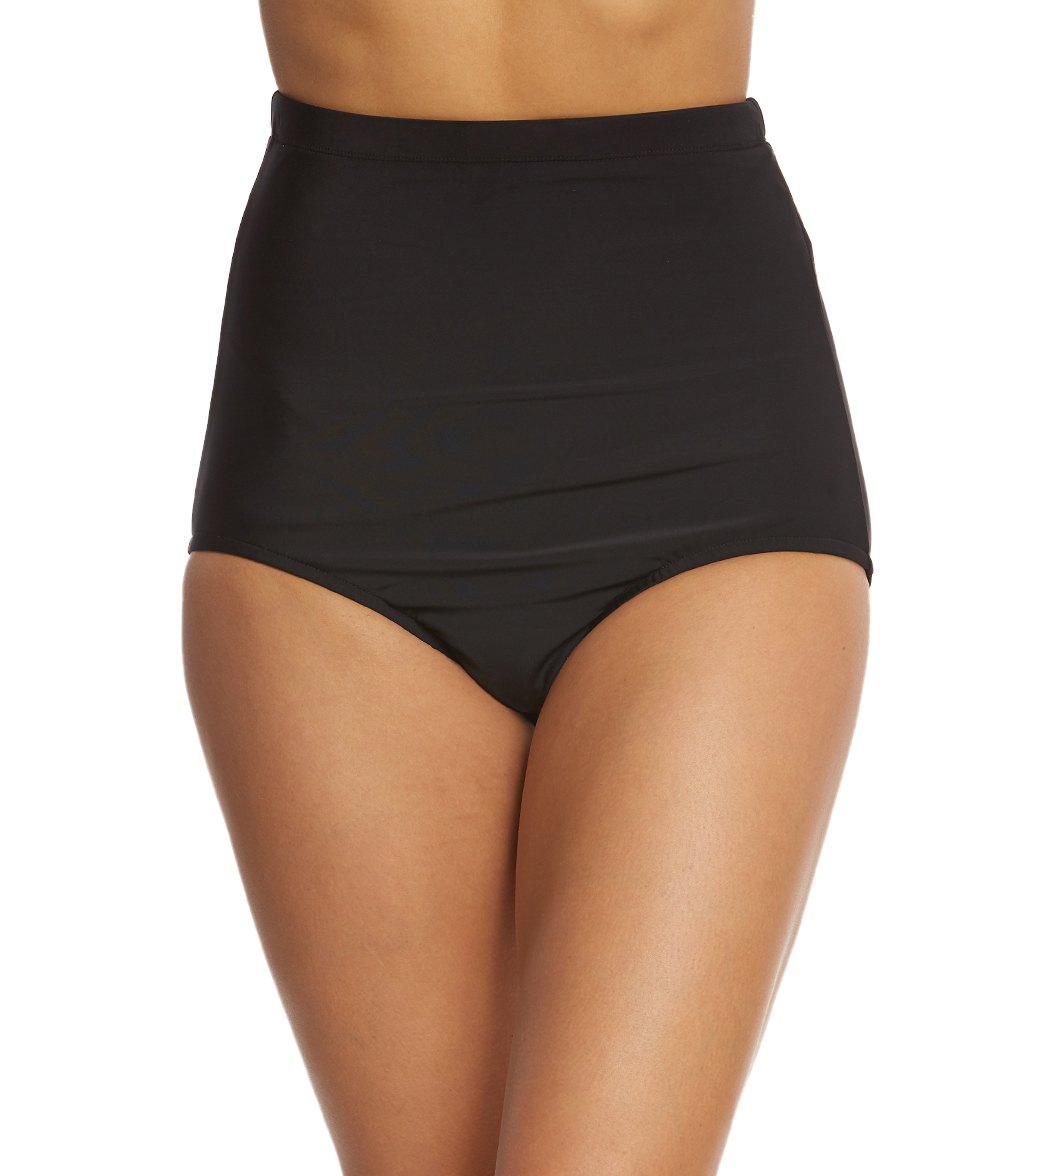 Penbrooke Swimwear Solid Ultra High Waist Pants Bikini Bottom - Black 8 Nylon/Spandex - Swimoutlet.com